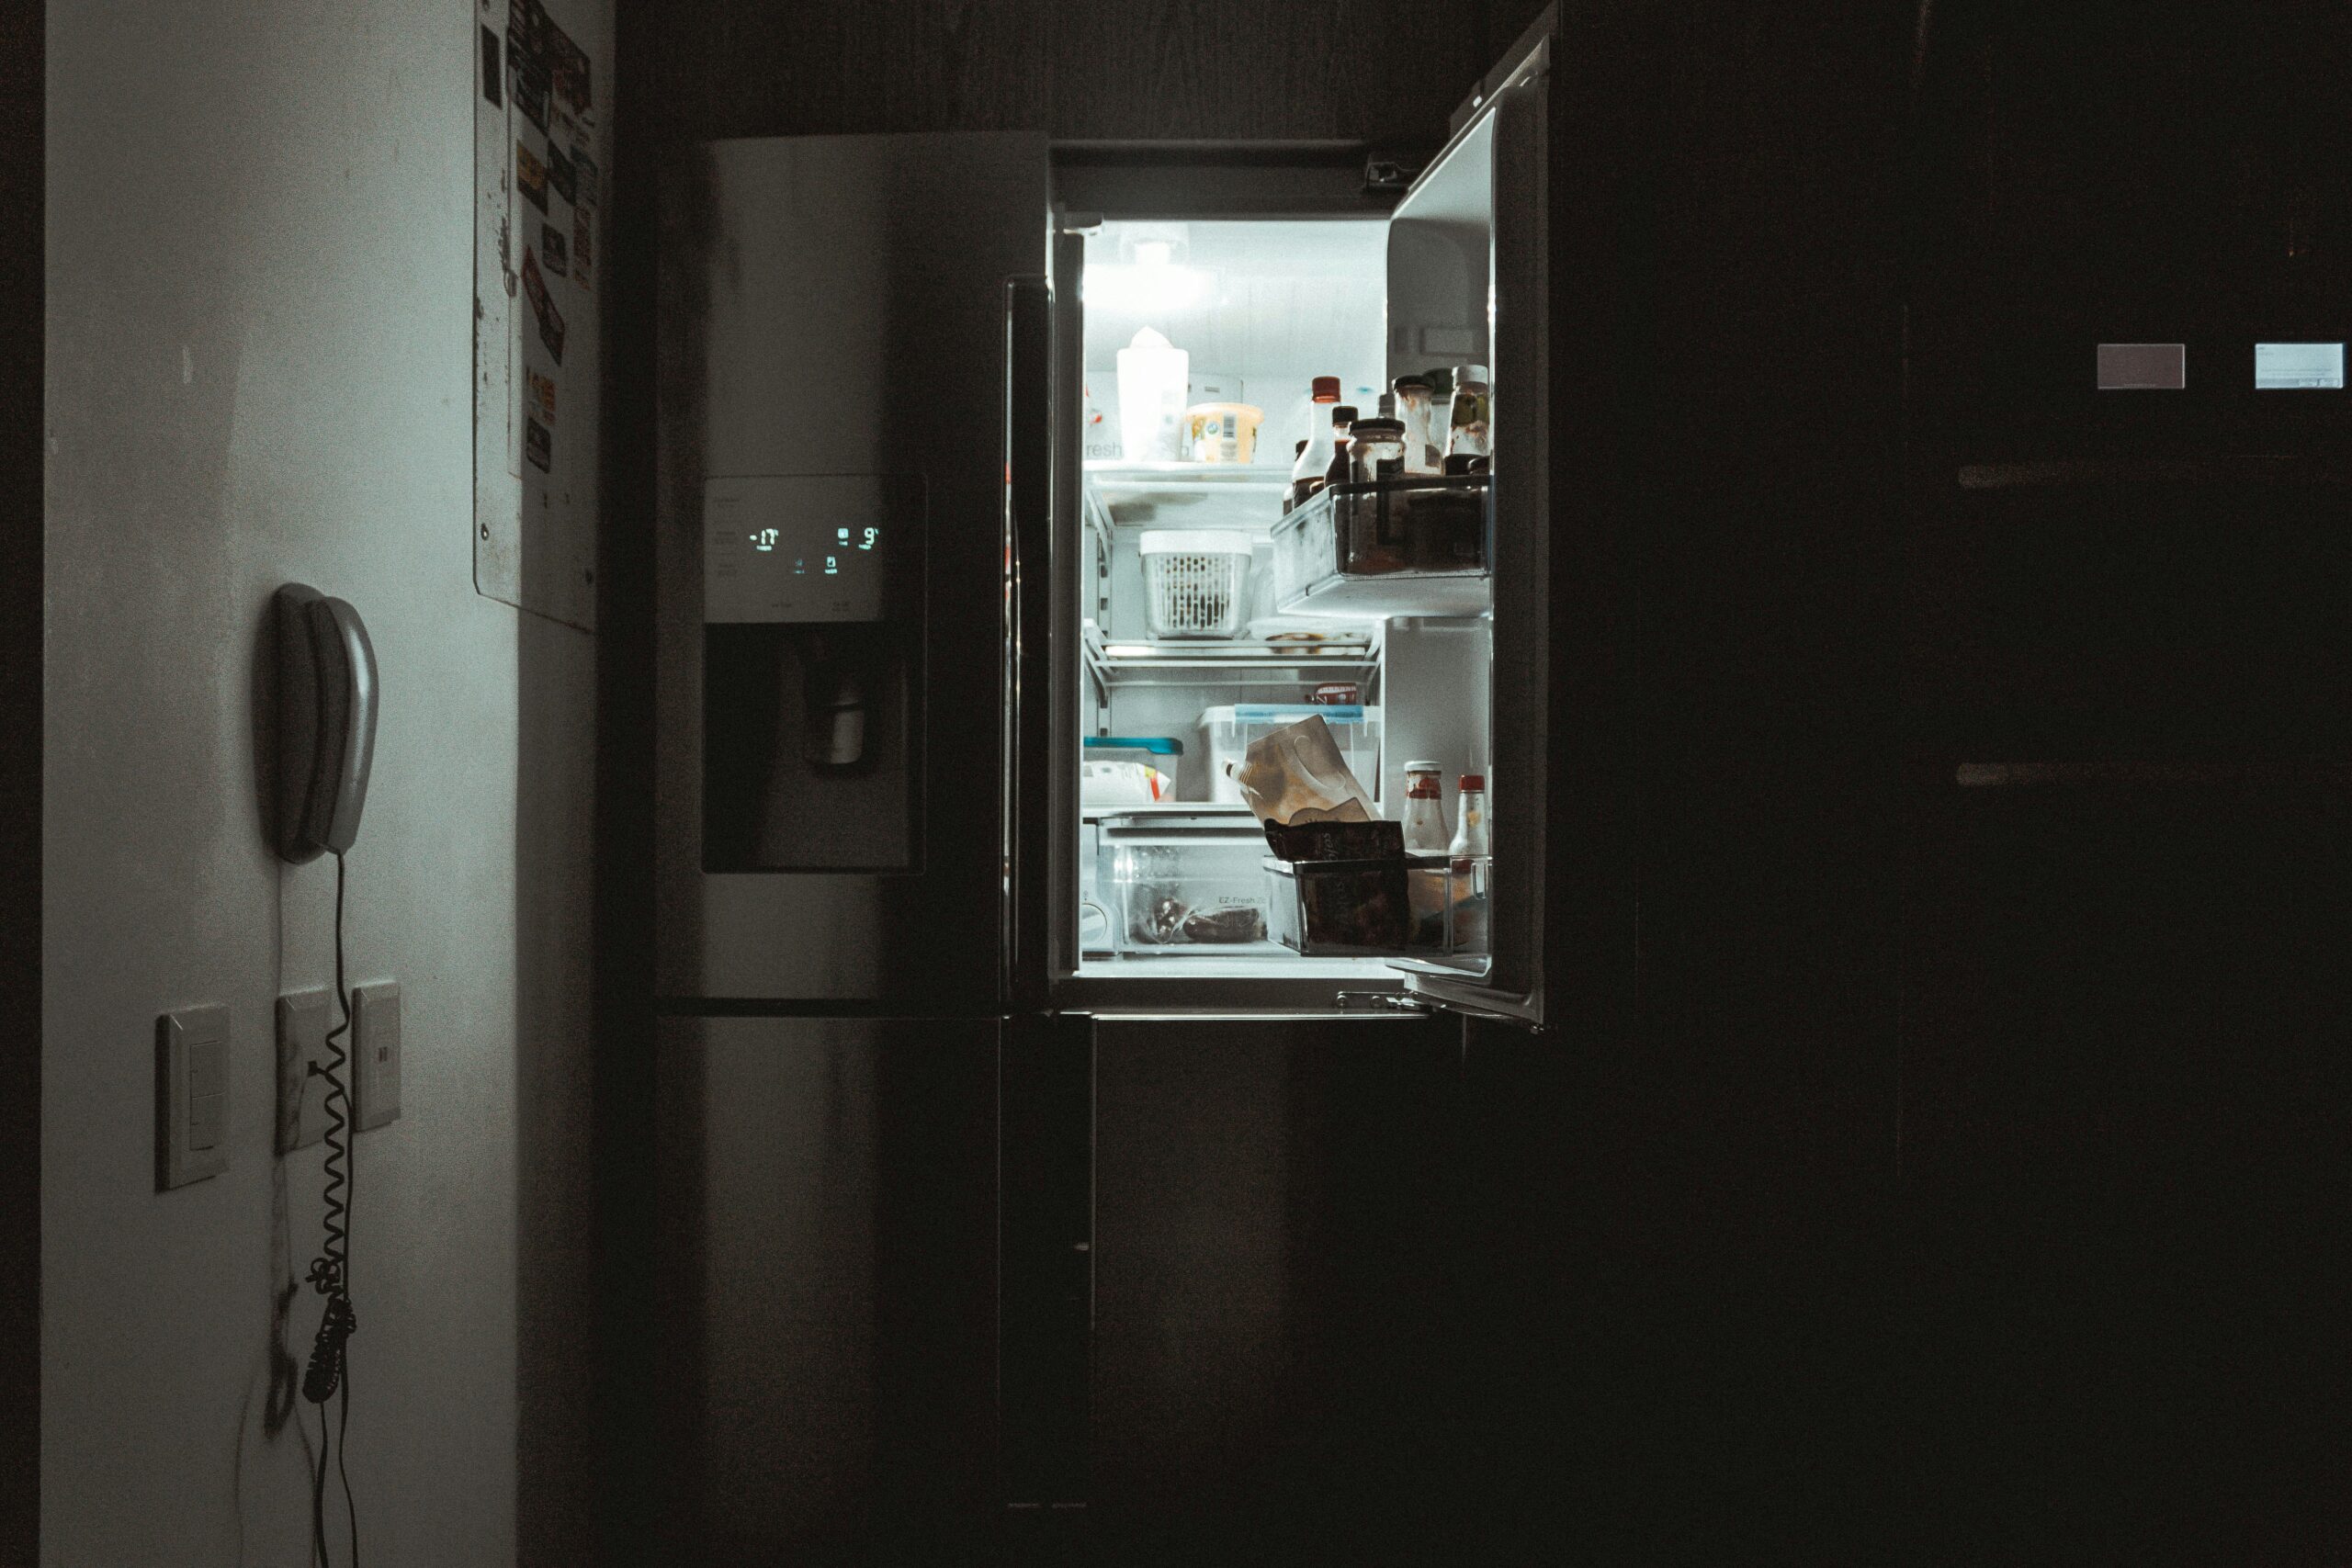 холодильник, еда